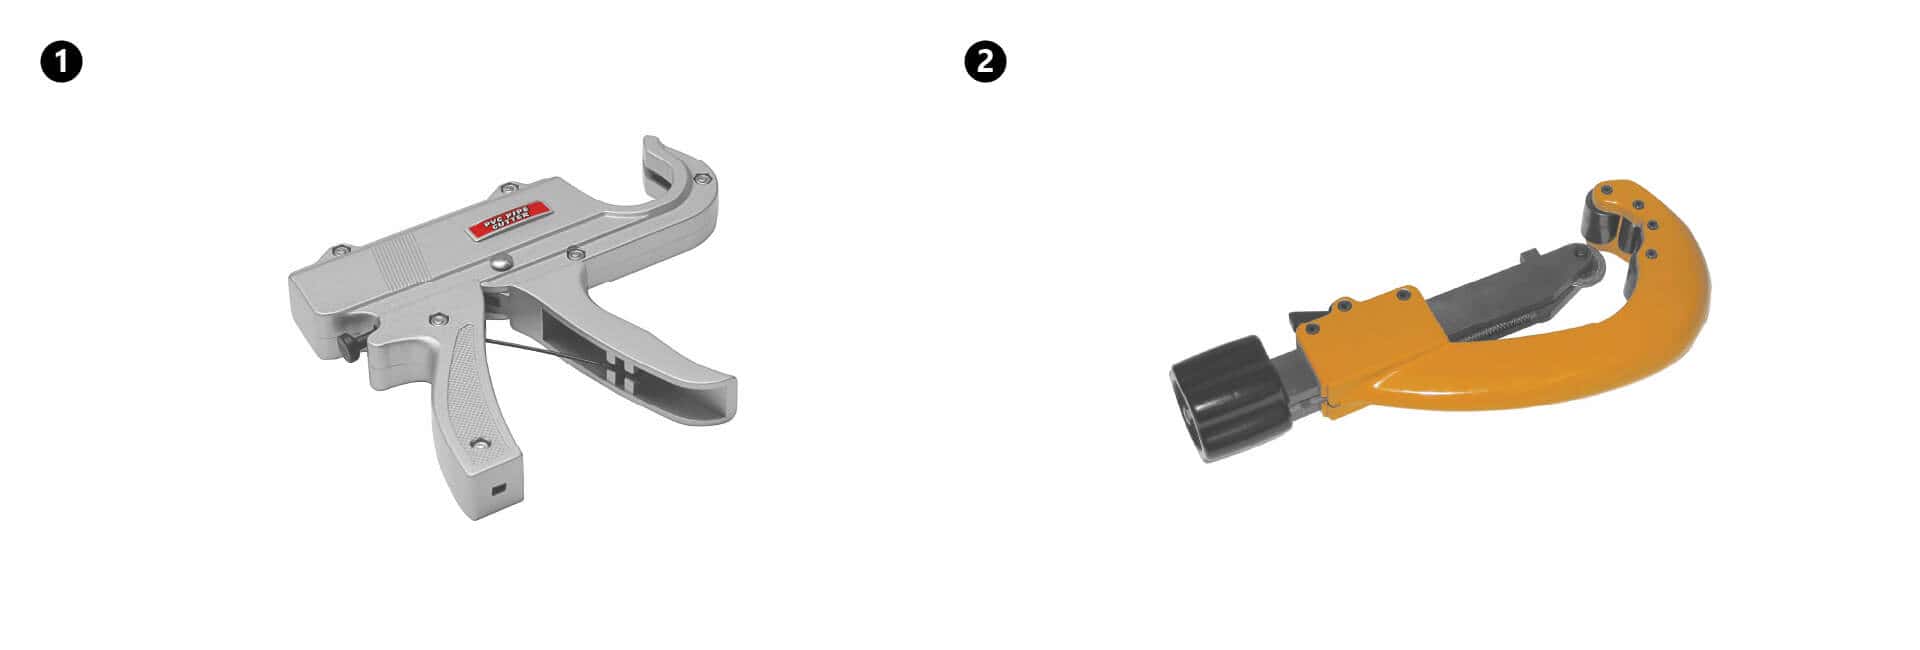 KAN-therm - ultraPRESS System - Εικόνα ψαλιδιών με πιστόλι για σωλήνες διαμέτρου 14-32 mm και περιφερικών ψαλιδιών για διαμέτρους 16-63 mm.